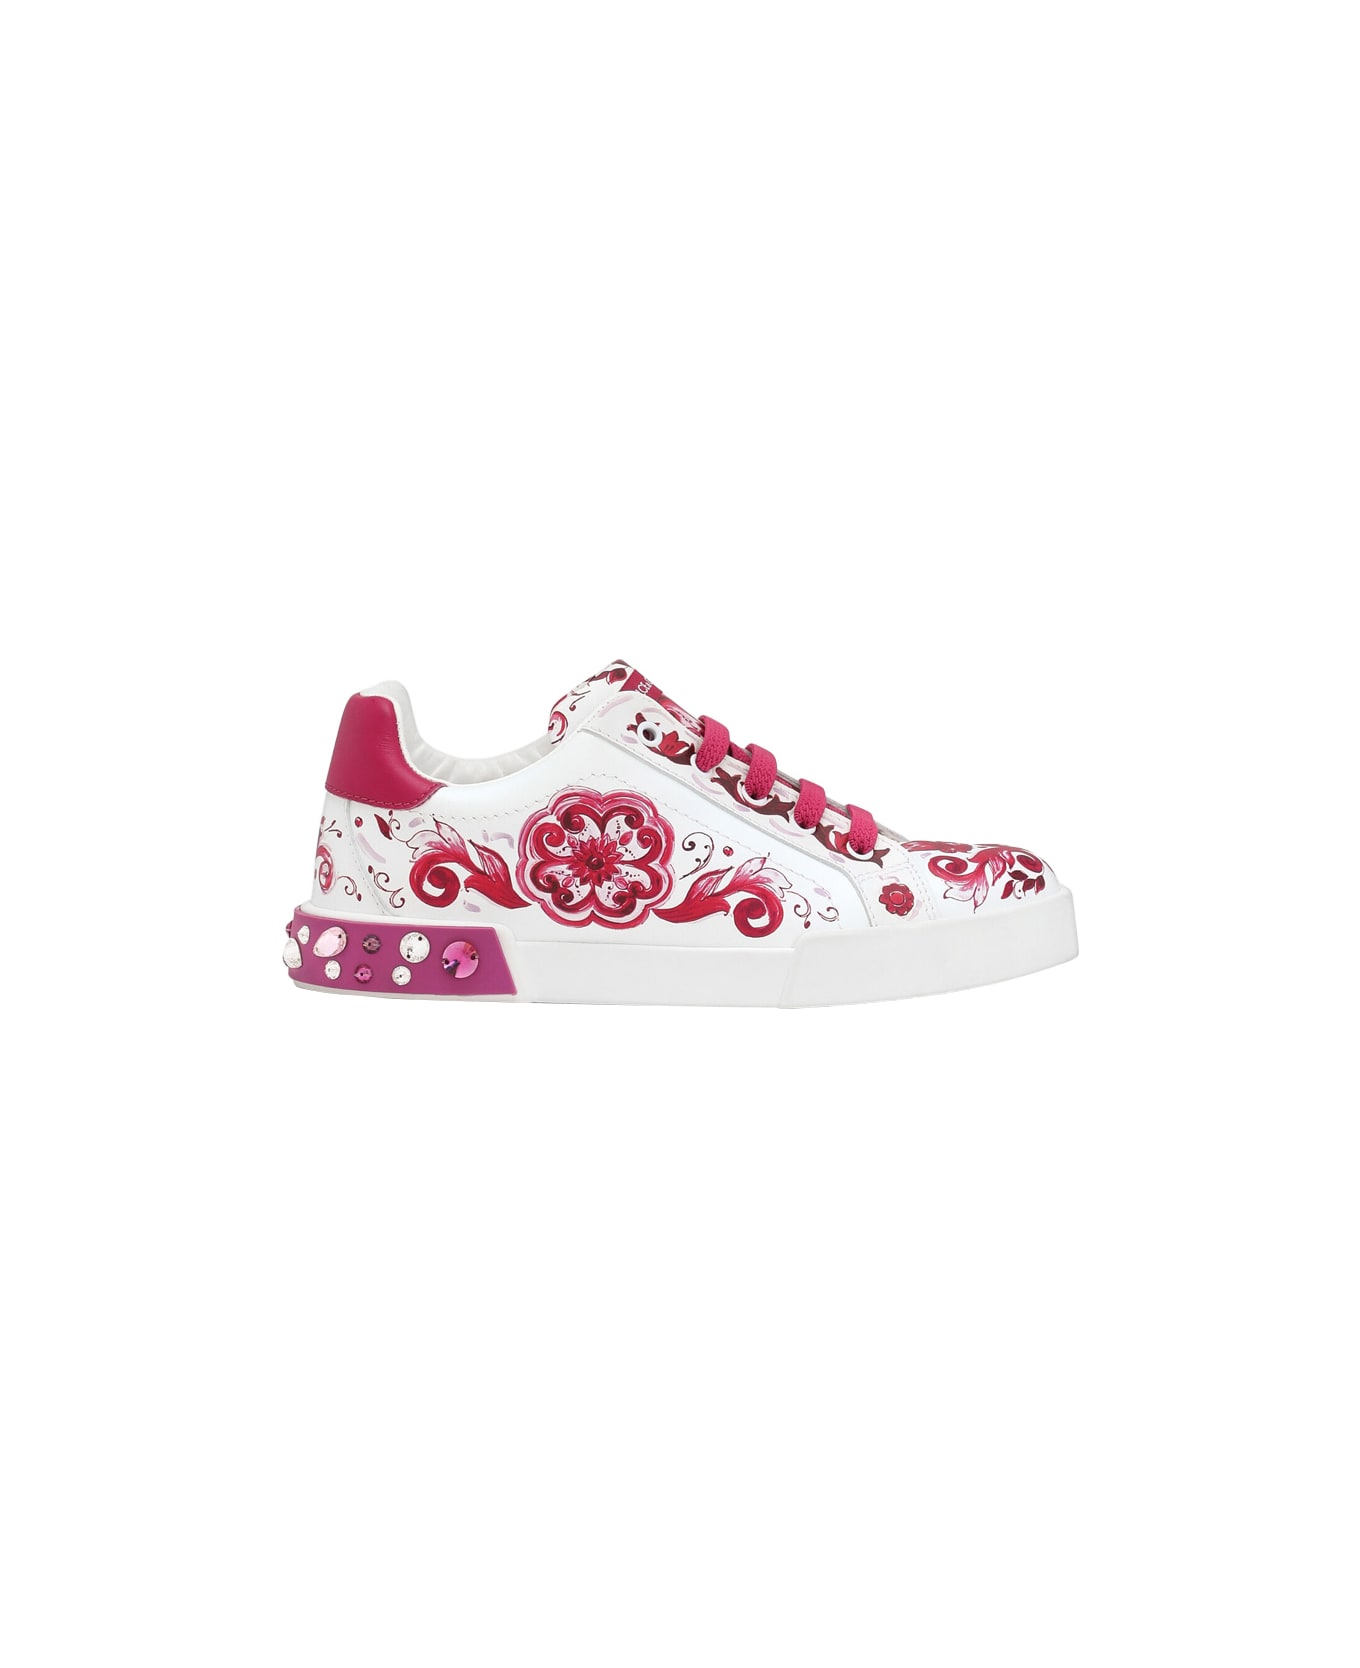 Dolce & Gabbana Portofino Sneakers With Fuchsia Majolica Print - Pink シューズ